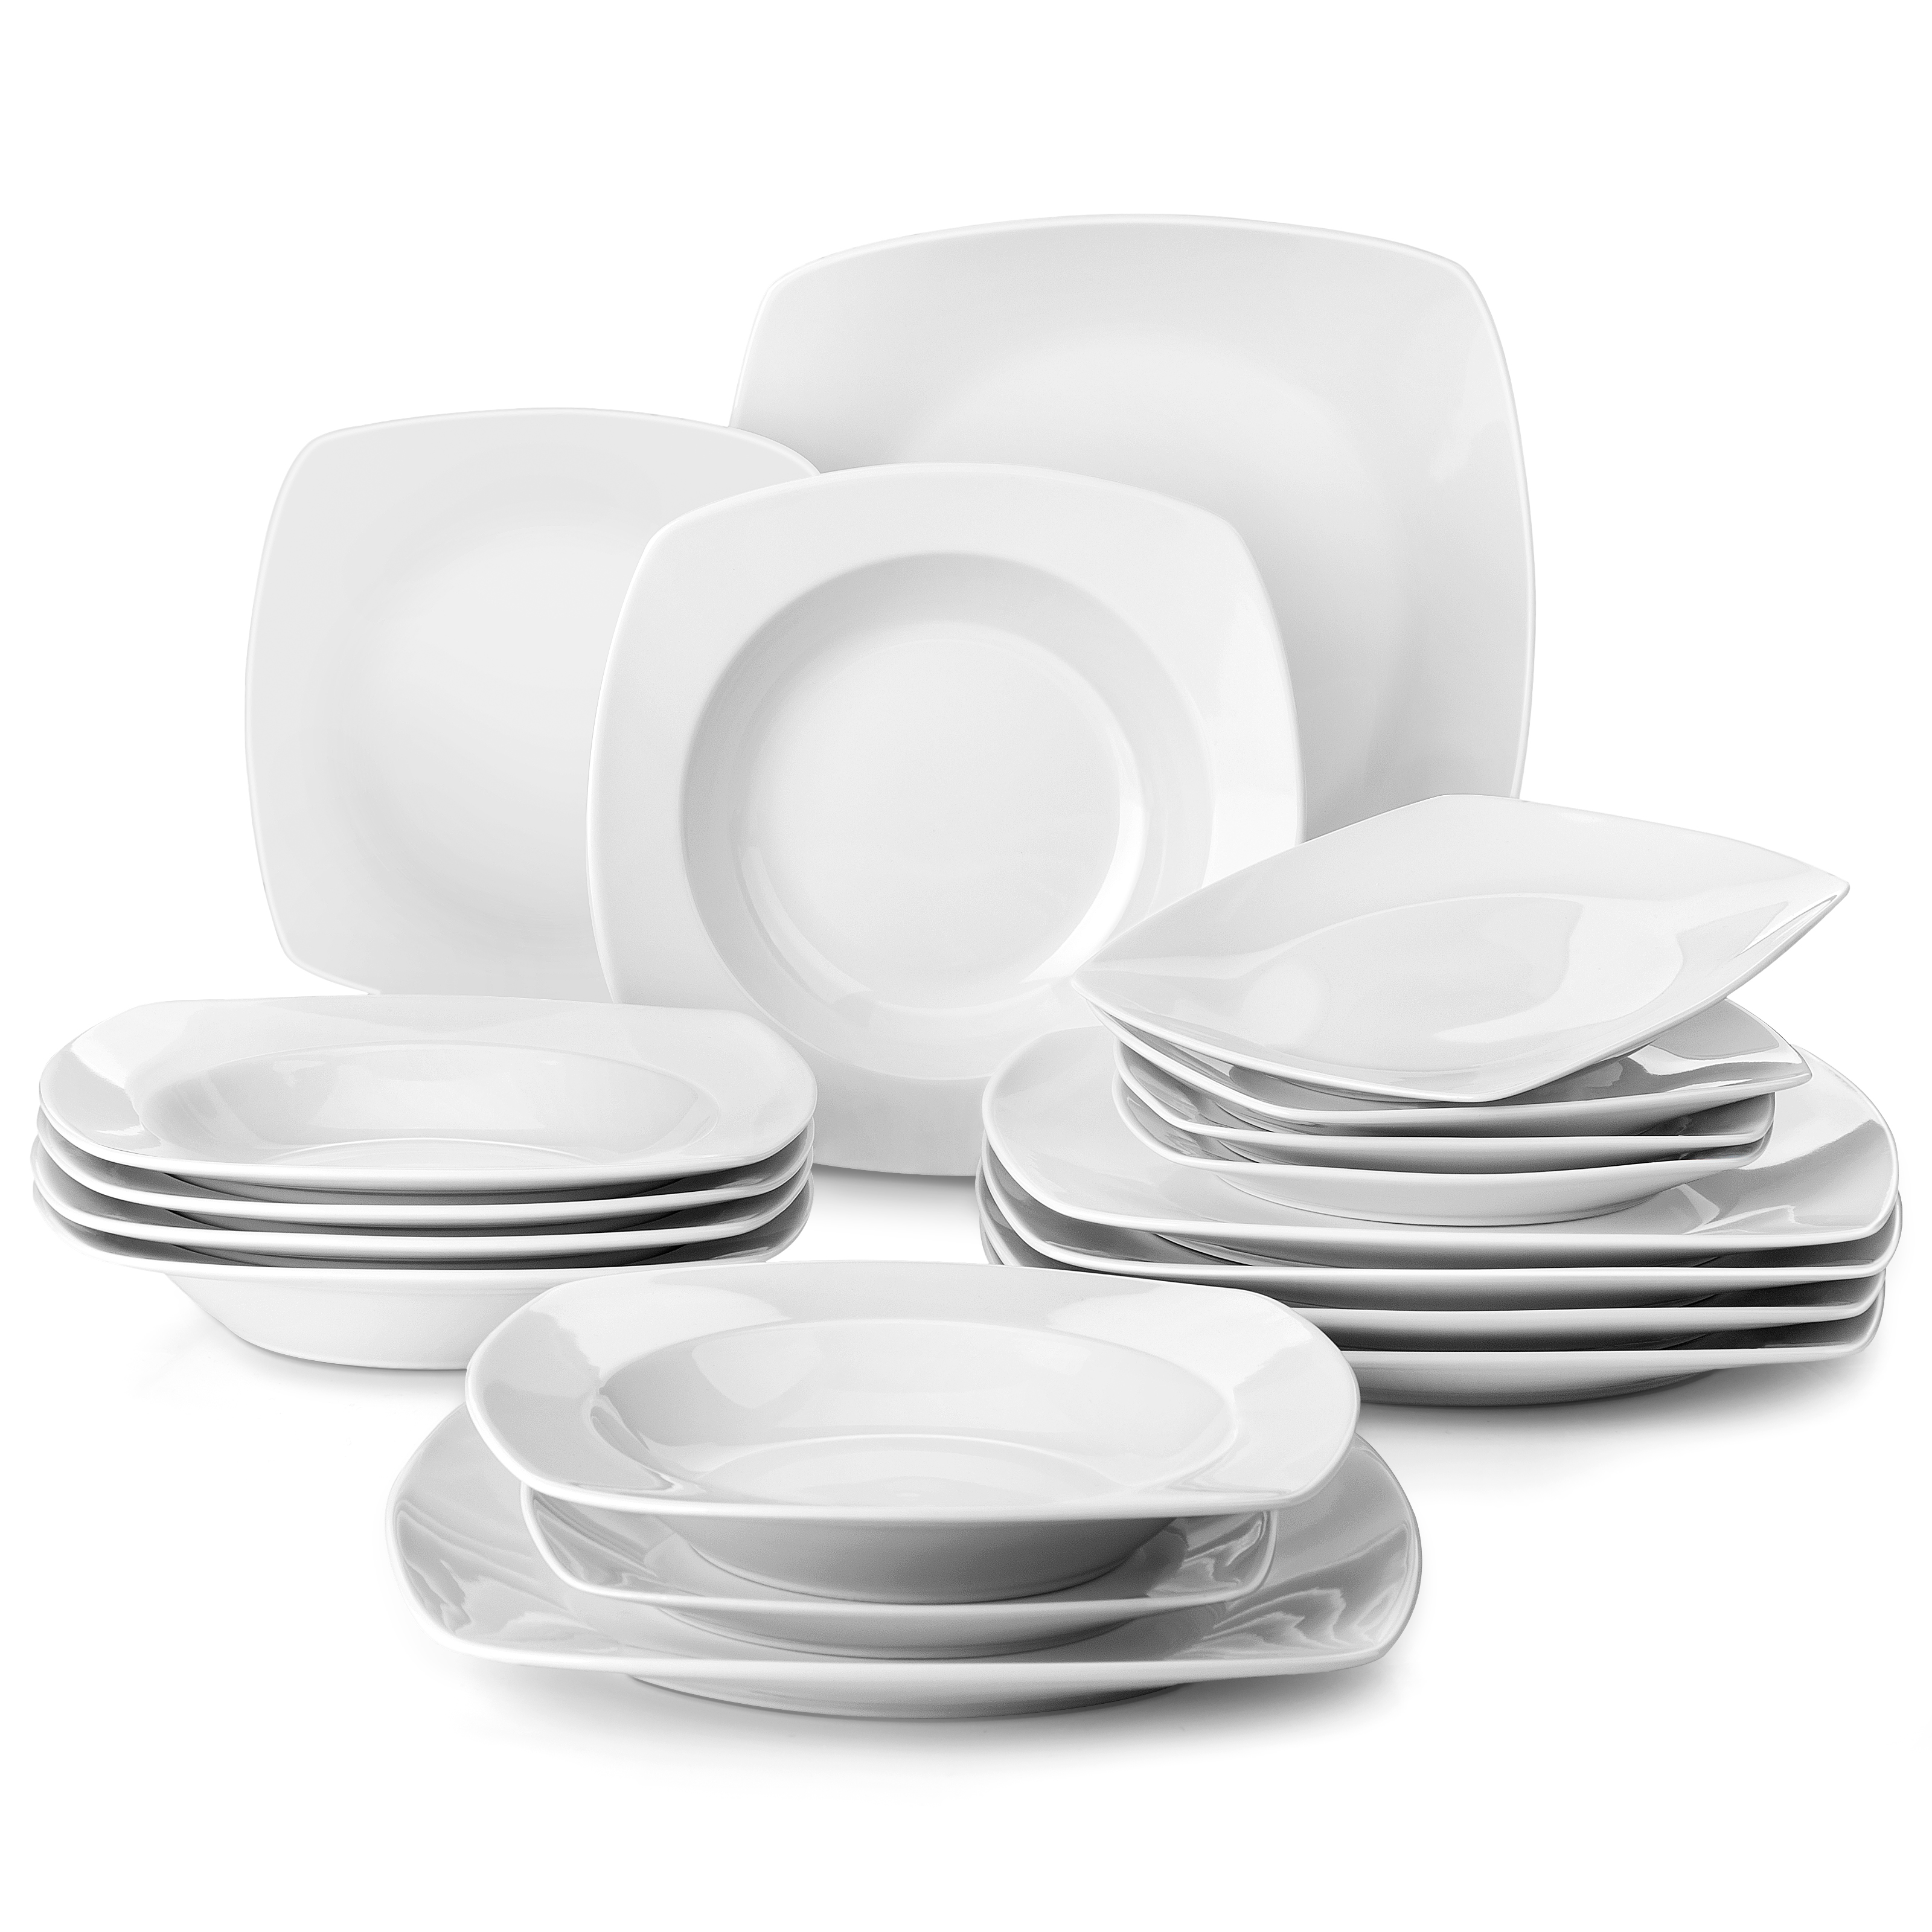 MALACASA, Porcelain Dishes Sets for 6, 18-Piece Dinner Set Ivory